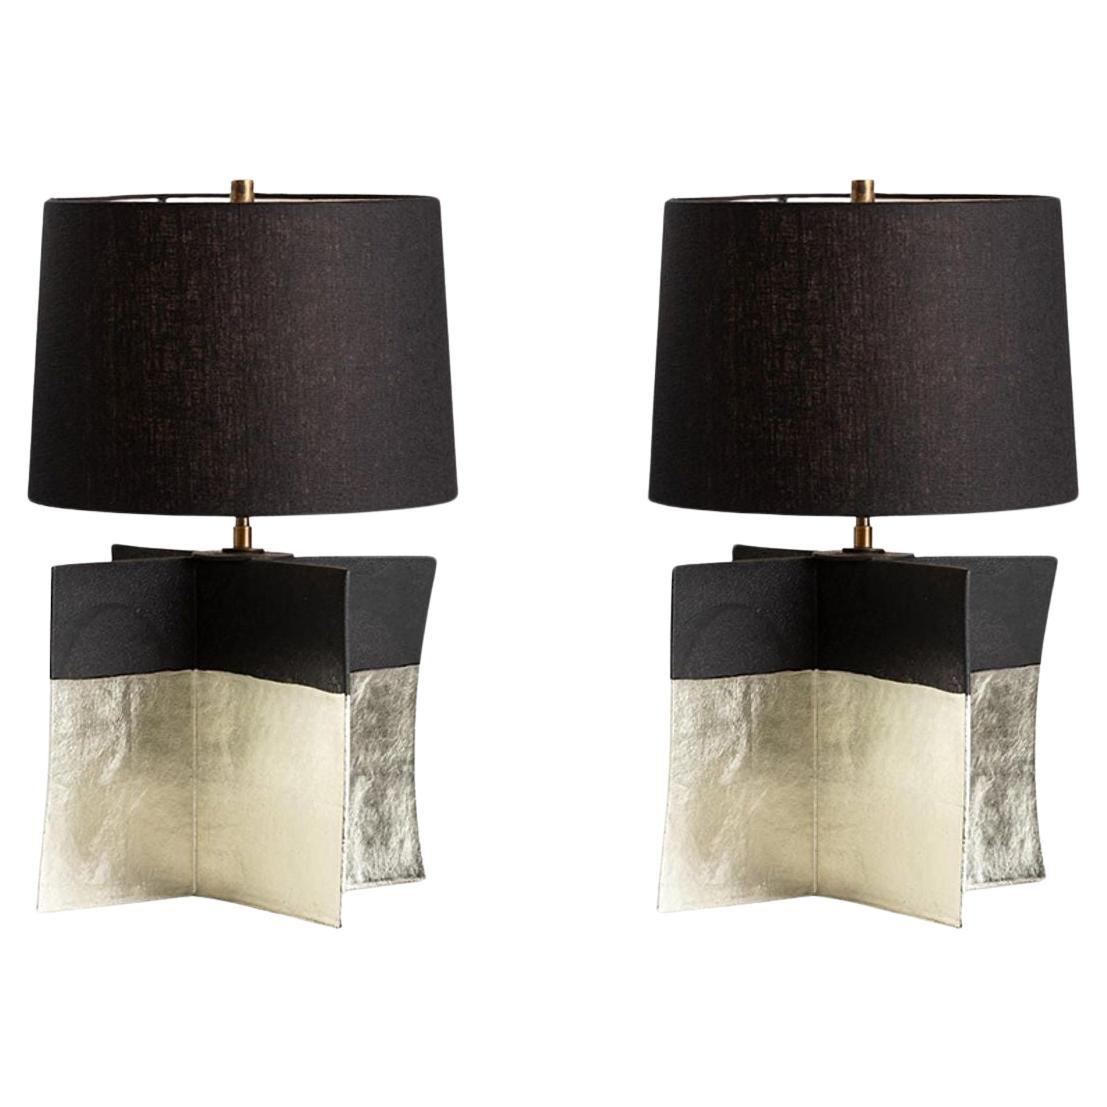 Dumais Made, Contemporary, Ceramic Croisillon Table Lamps, Gold Glaze, 2021